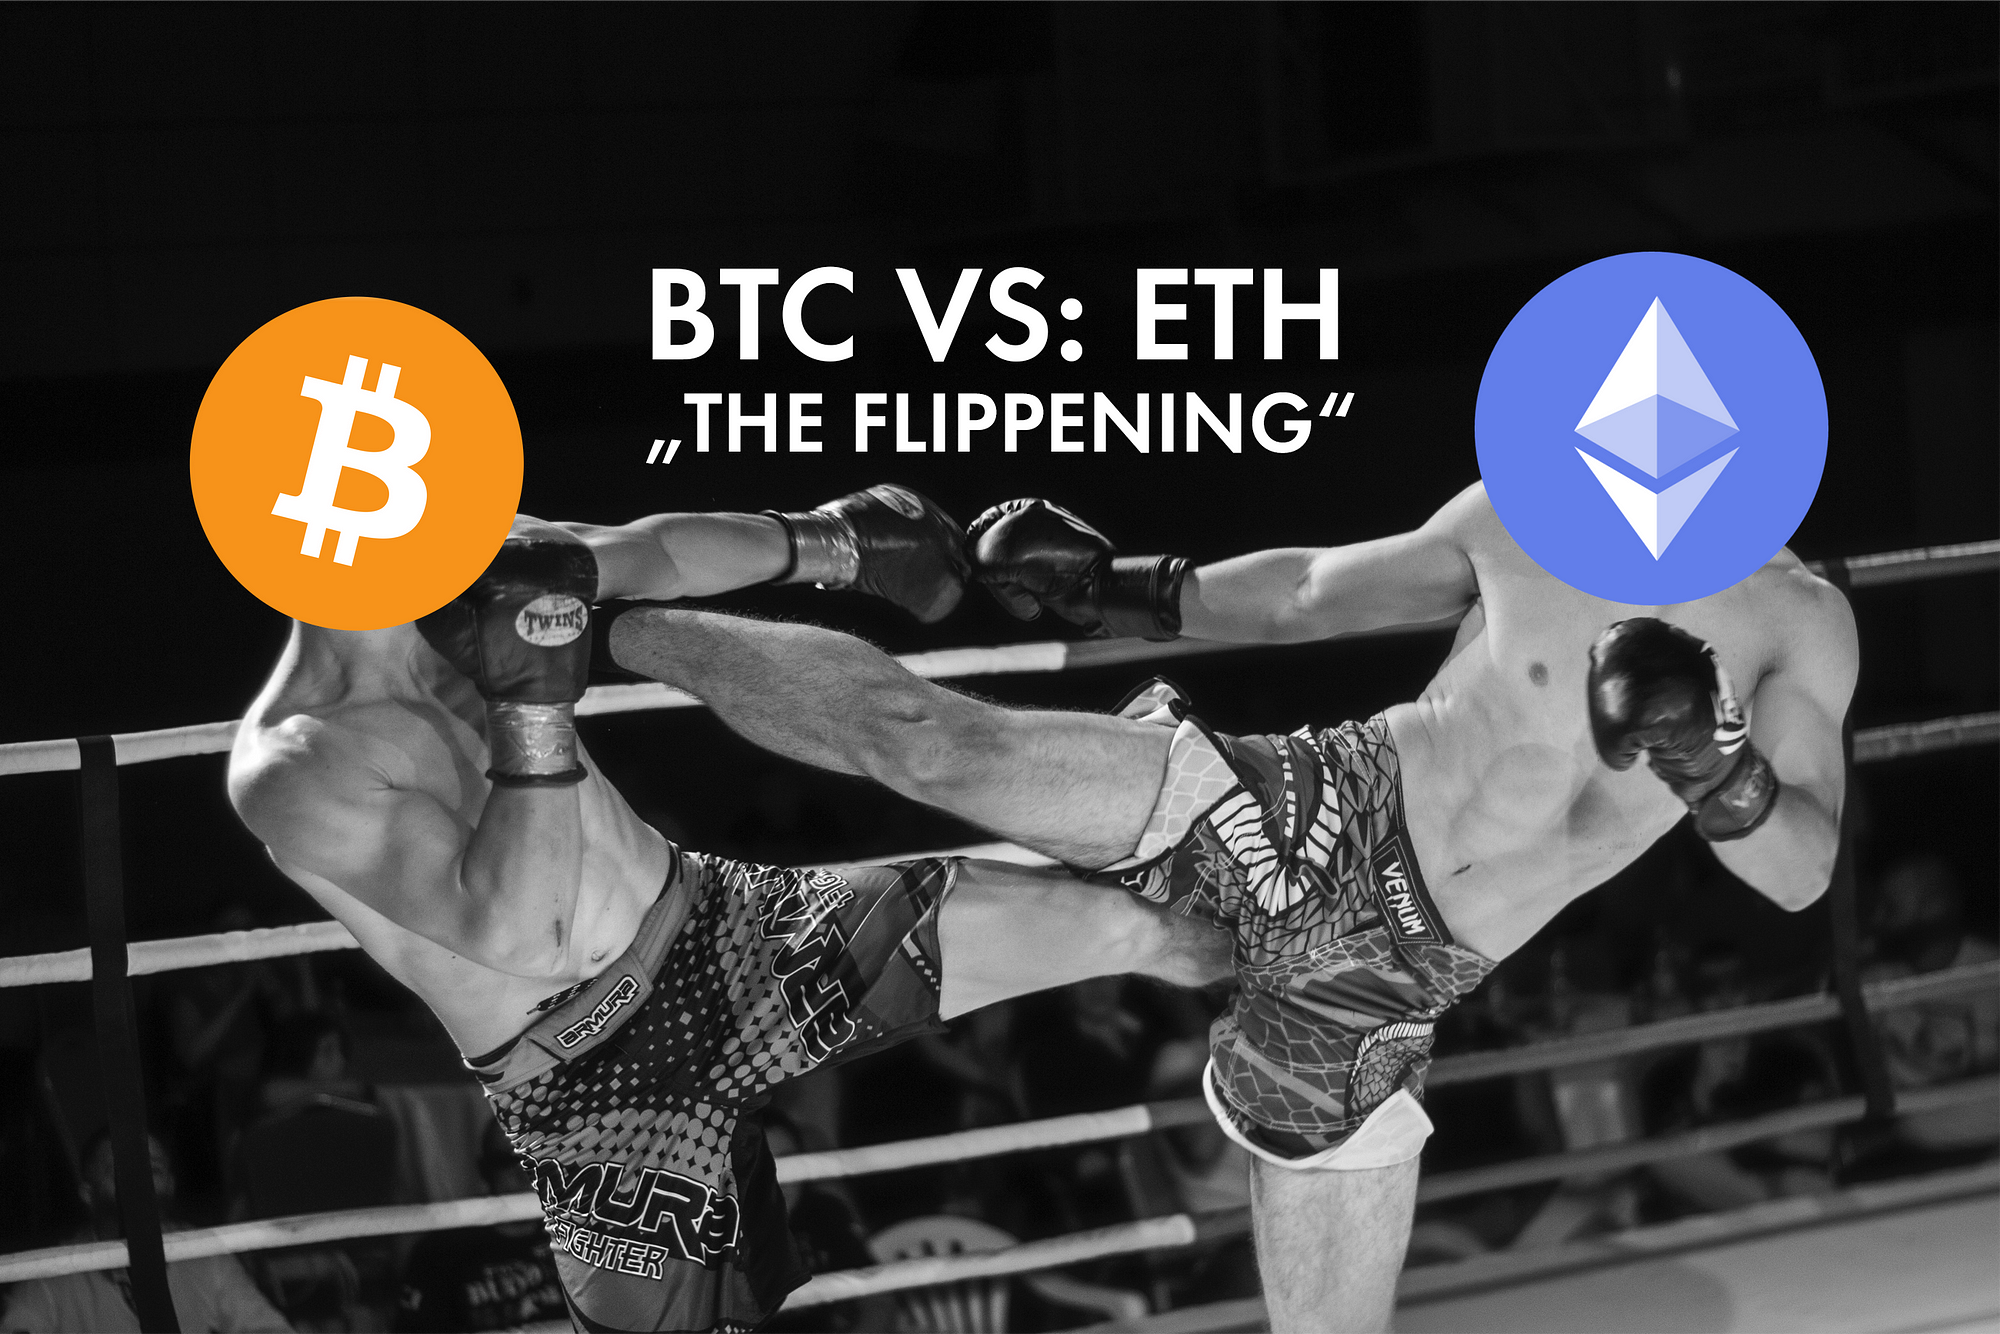 ethereum to beat bitcoin